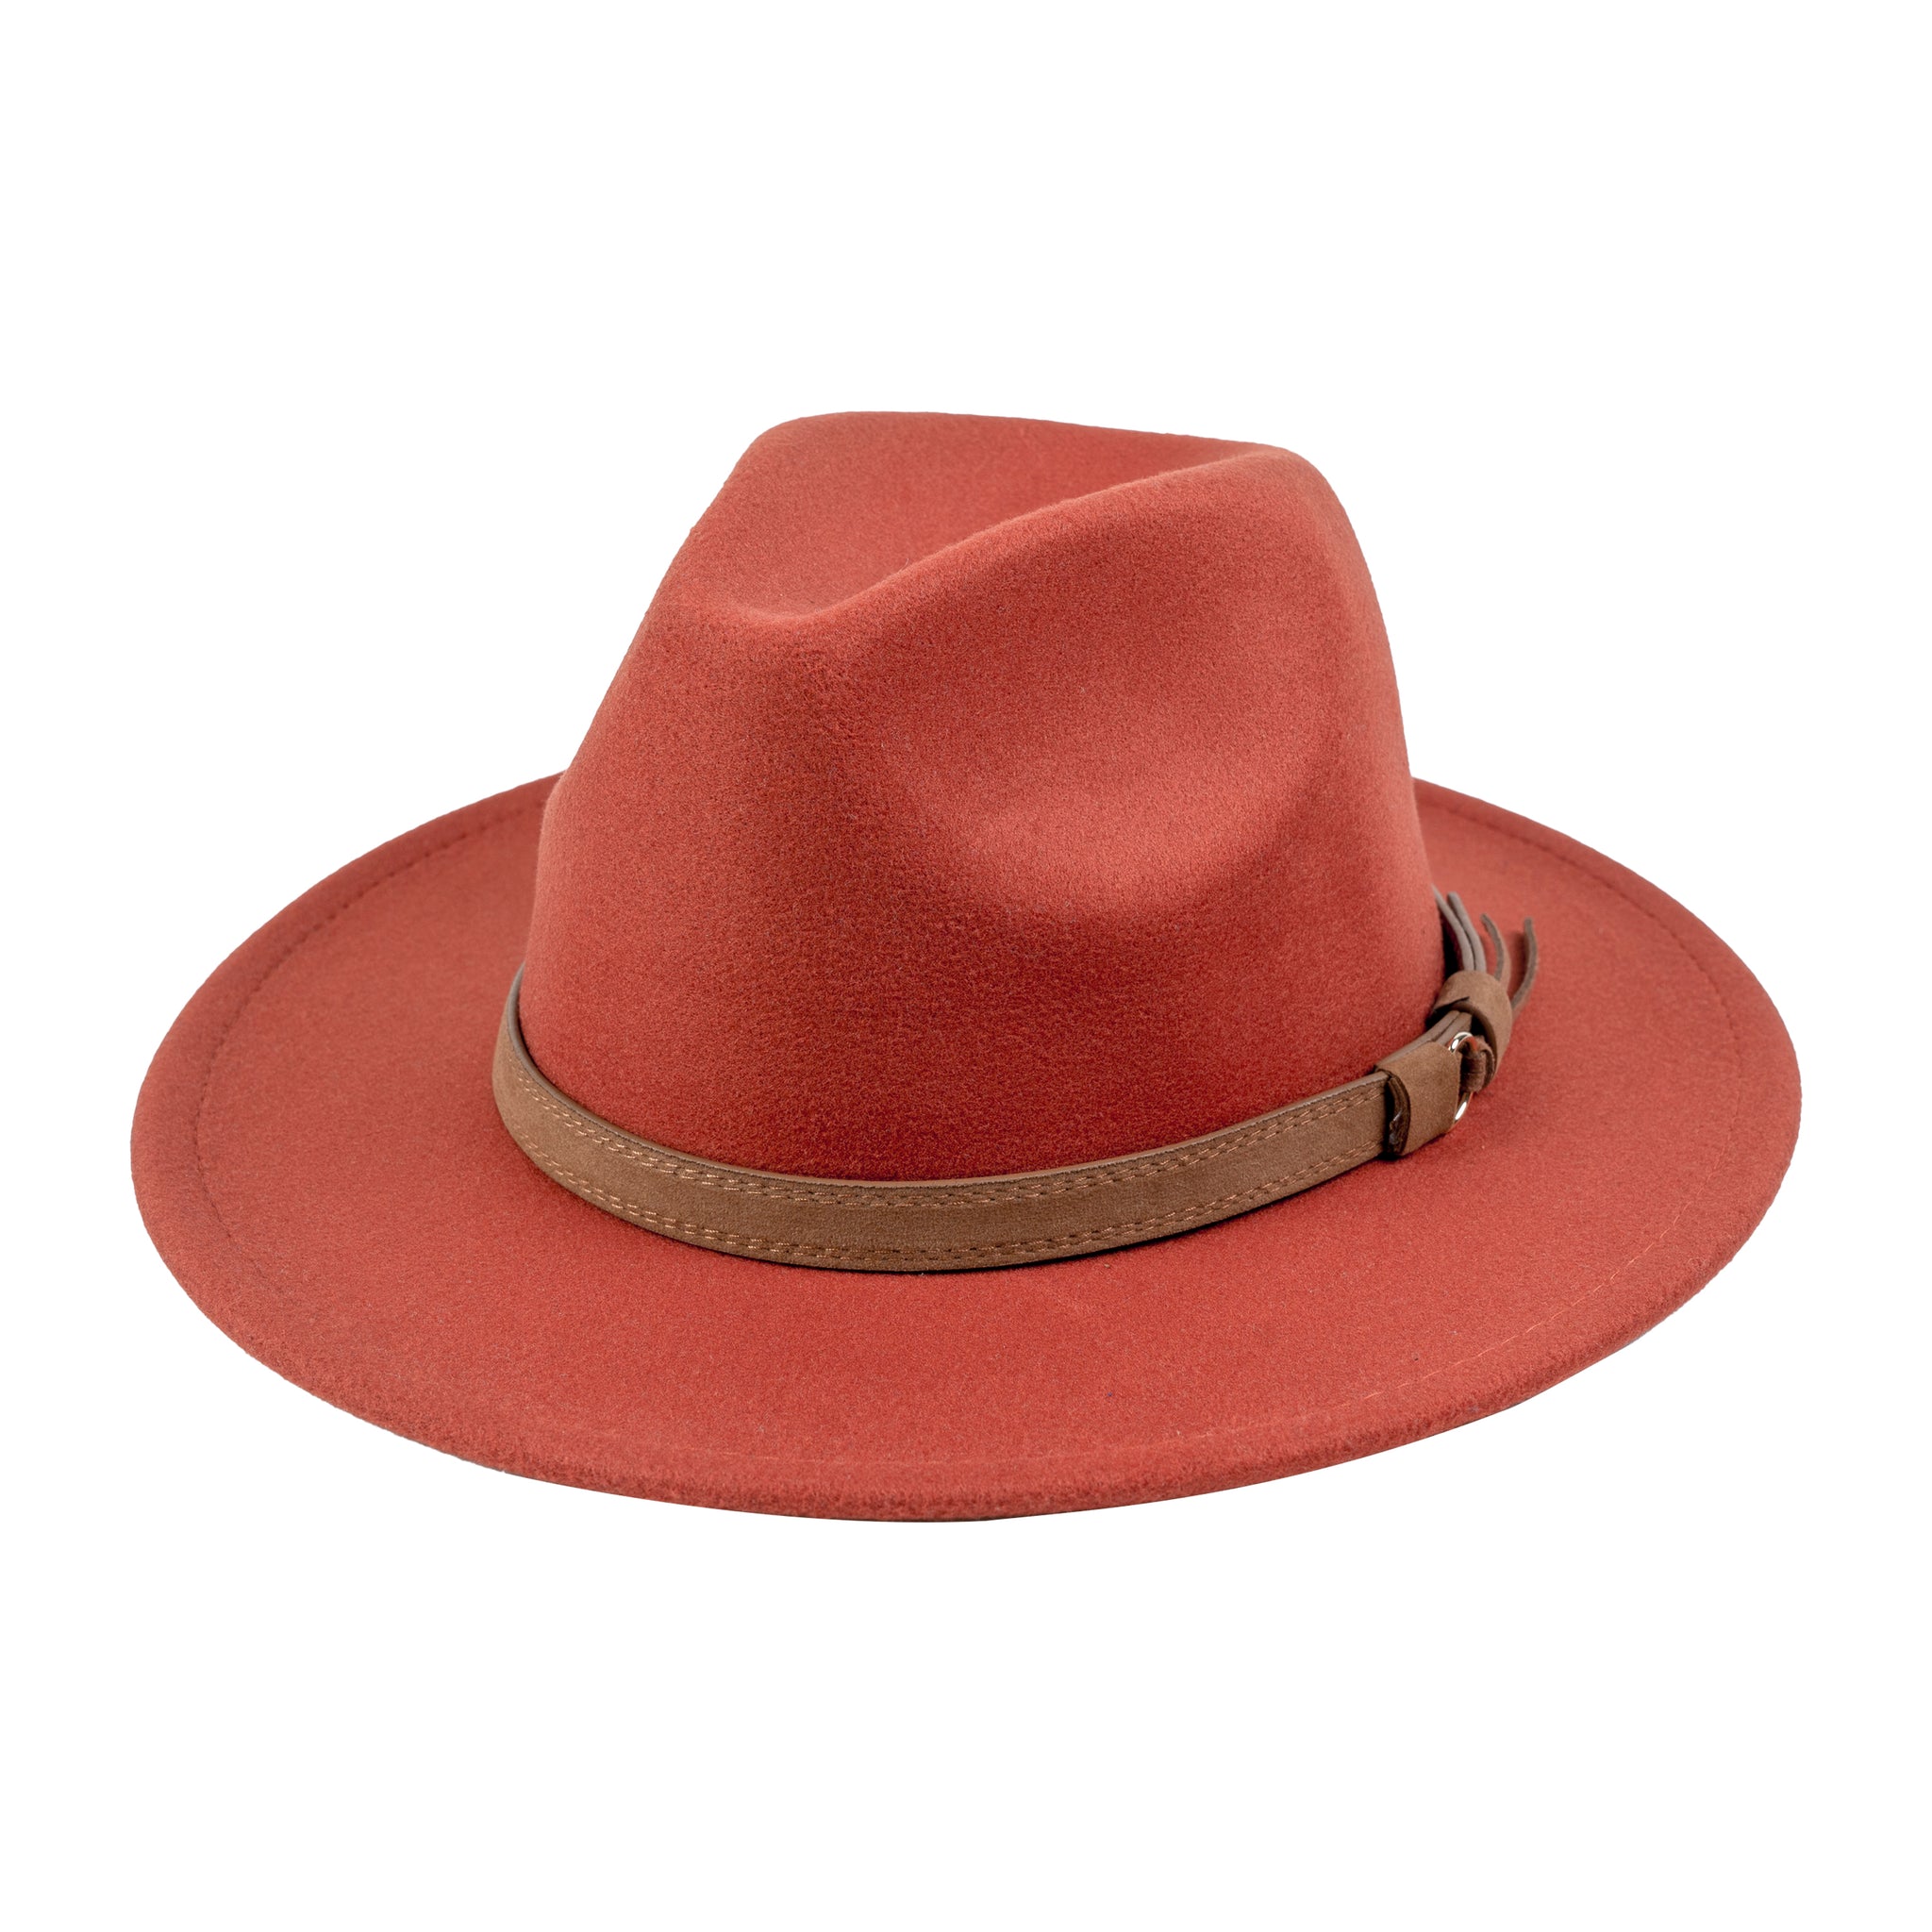 Chokore Pinched Fedora Hat with PU Leather Belt (Caramel)